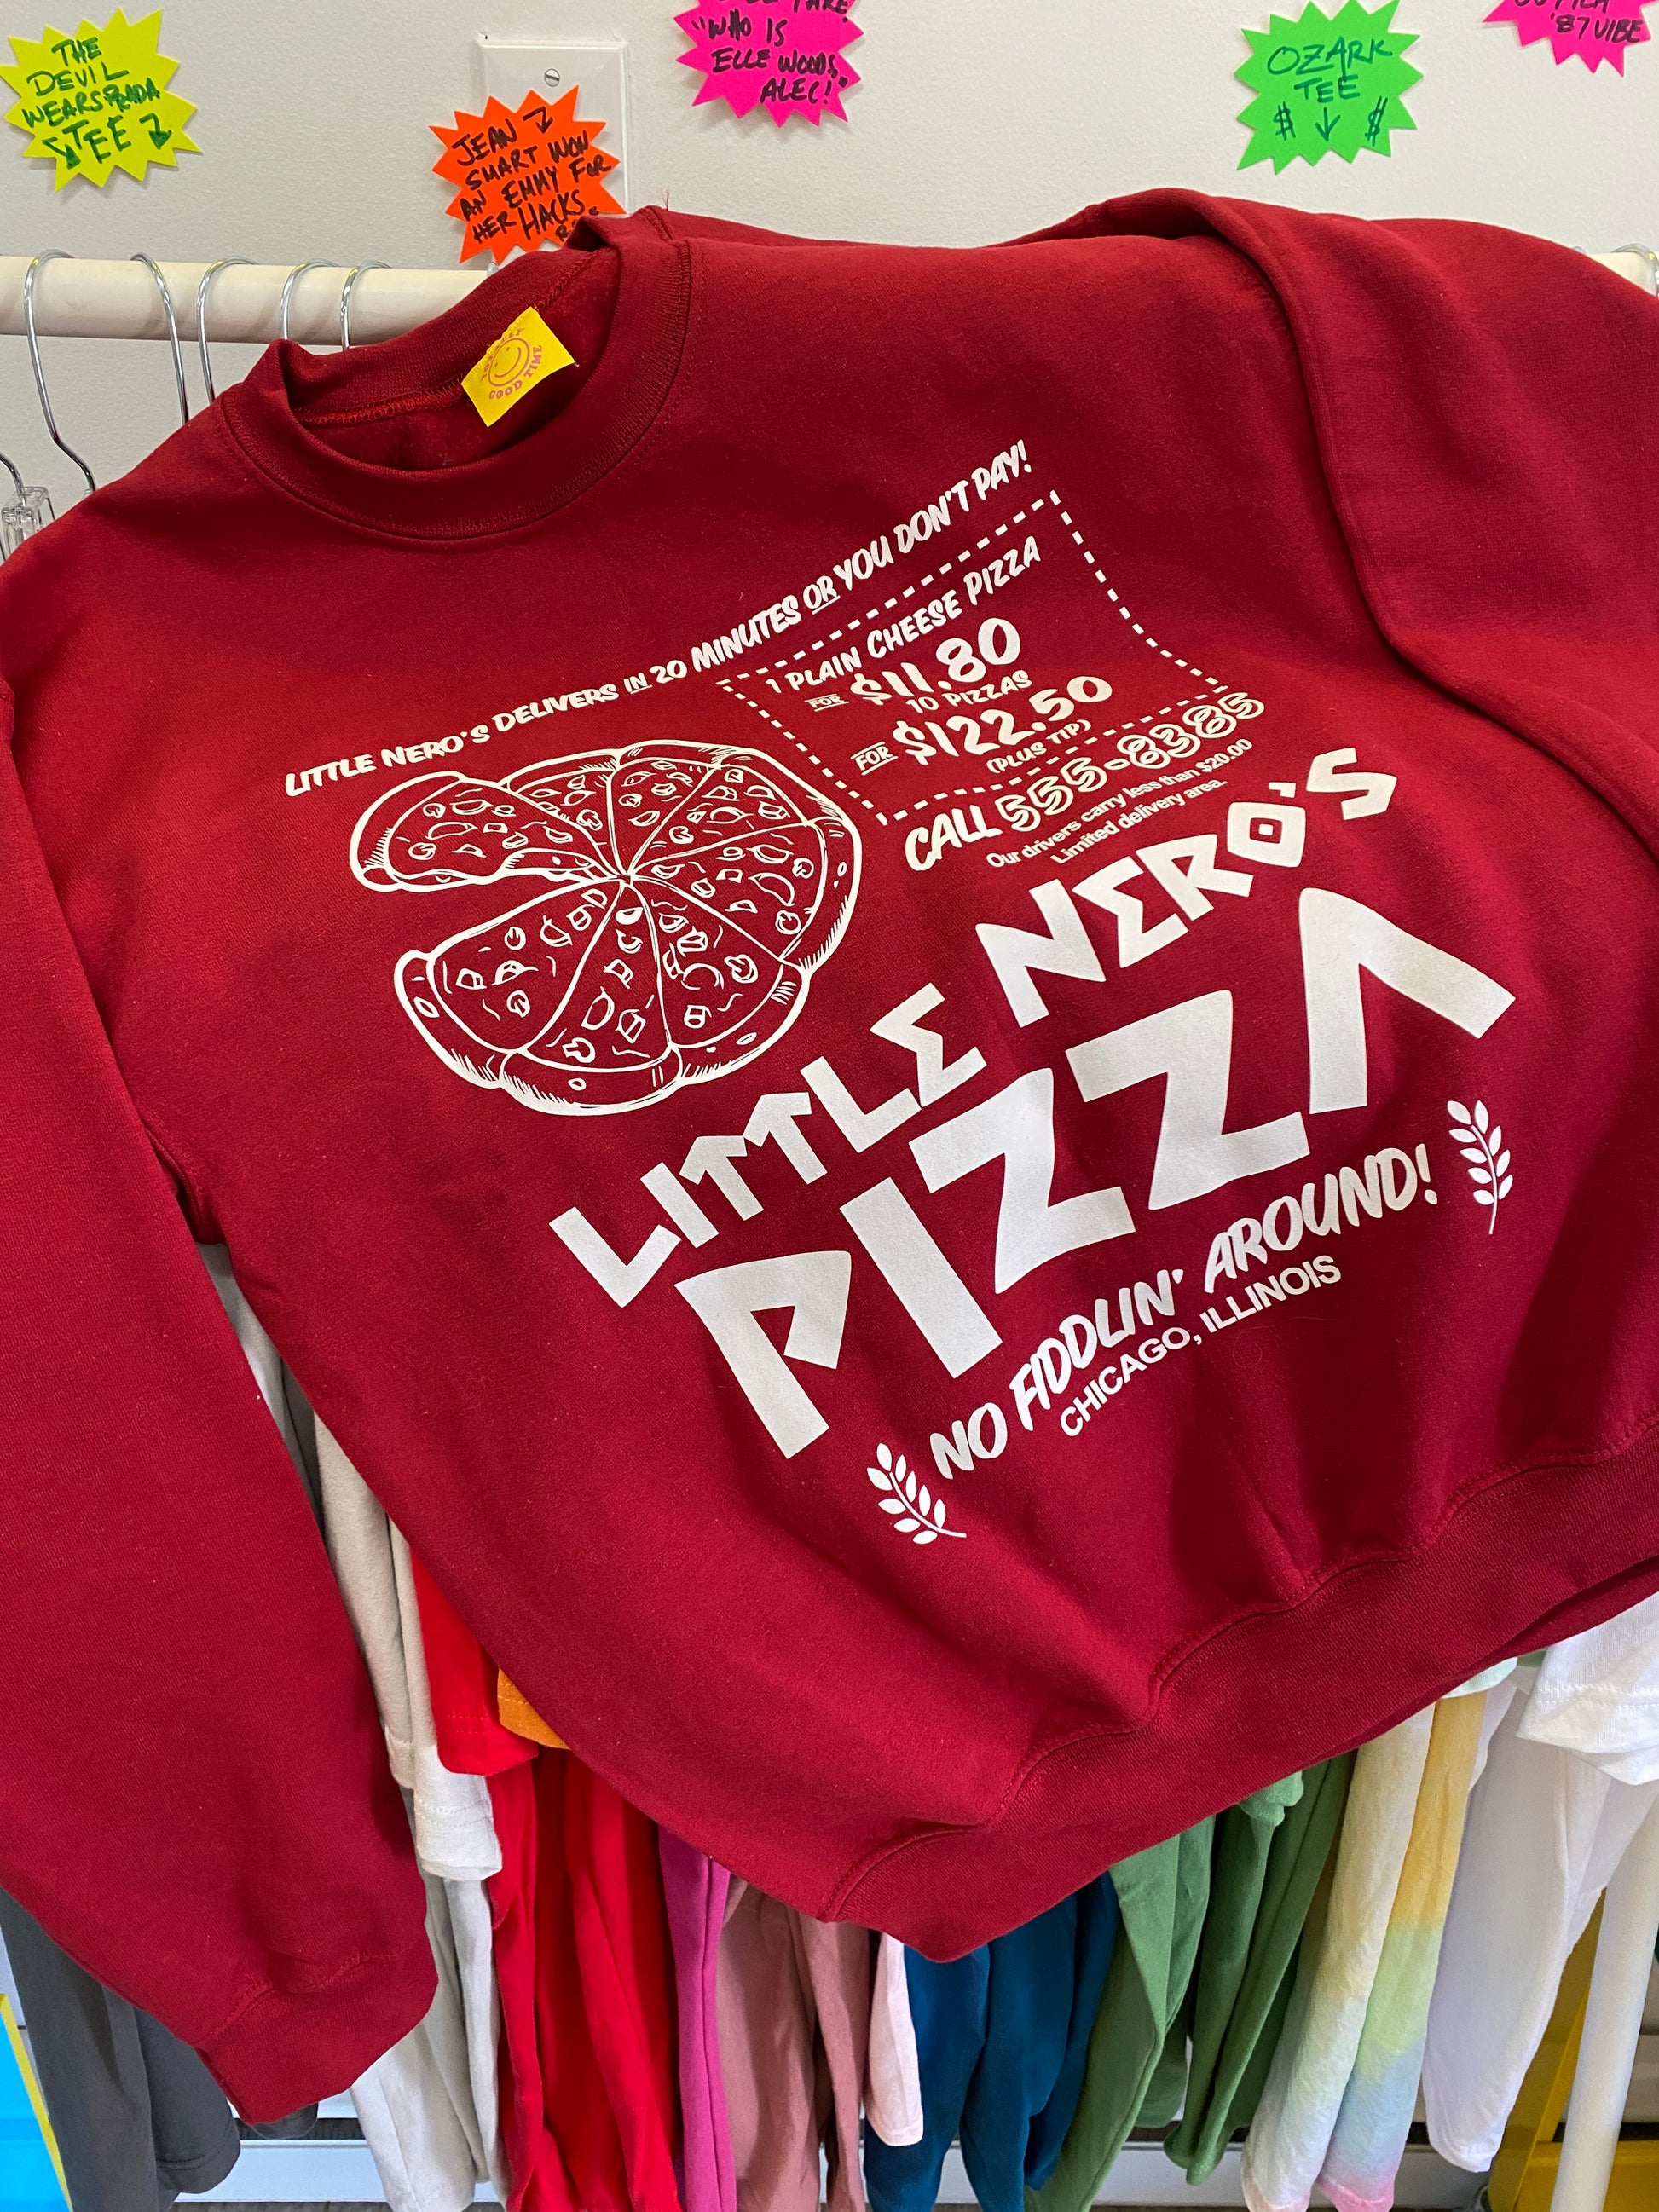 Home Alone Little Nero's Pizza Sweatshirt